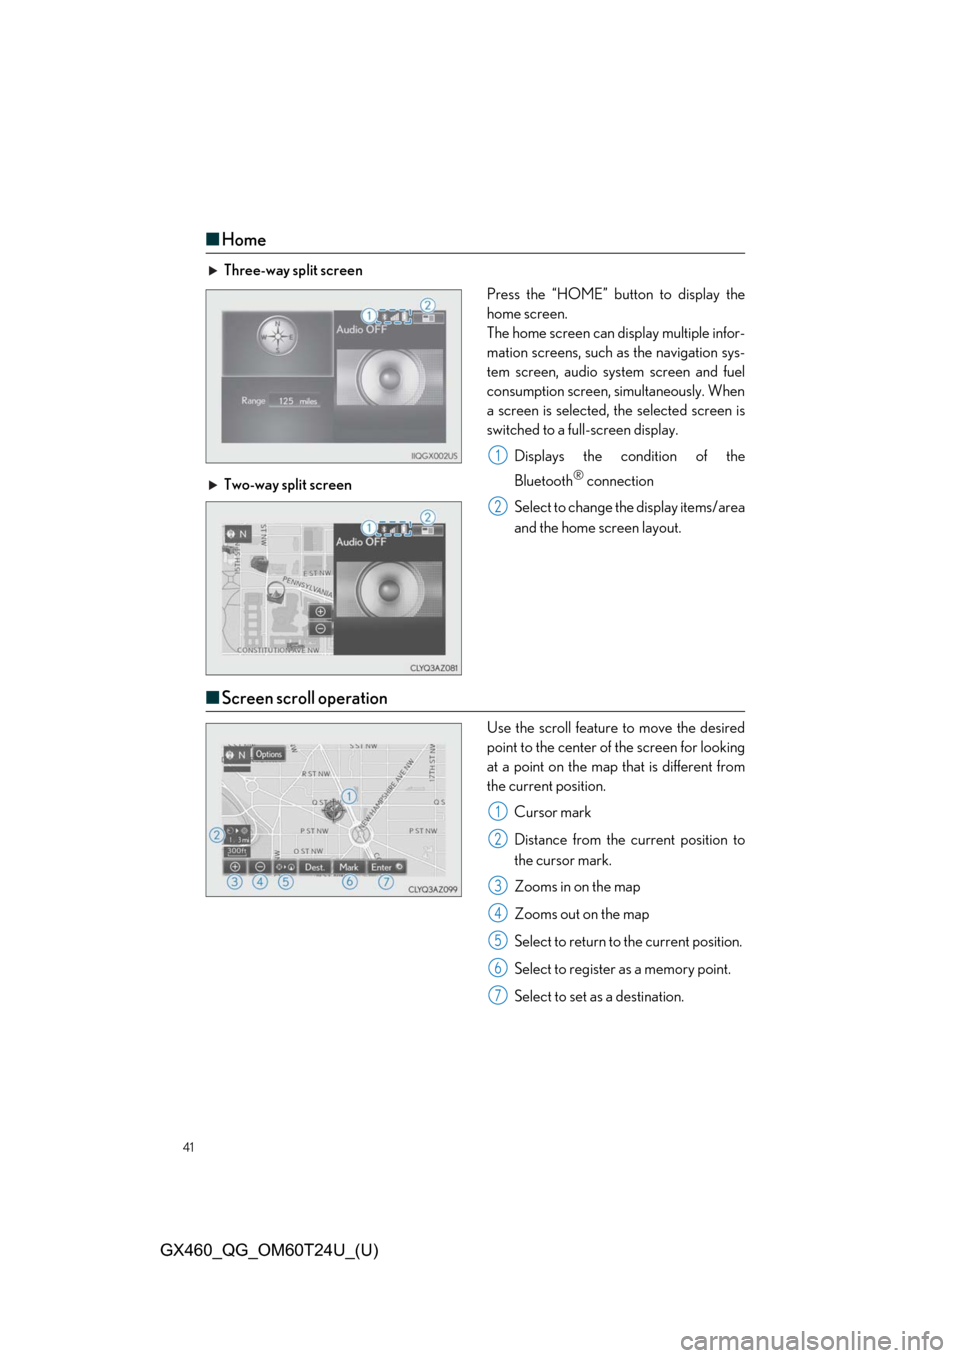 Lexus GX460 2021   / LEXUS 2021 GX460  QUICK GUIDE (OM60T24U) Service Manual 41
GX460_QG_OM60T24U_(U)
■Home
Three-way split screen
Press the “HOME” button to display the
home screen.
The home screen can display multiple infor-
mation screens, such as the navigation sys-
